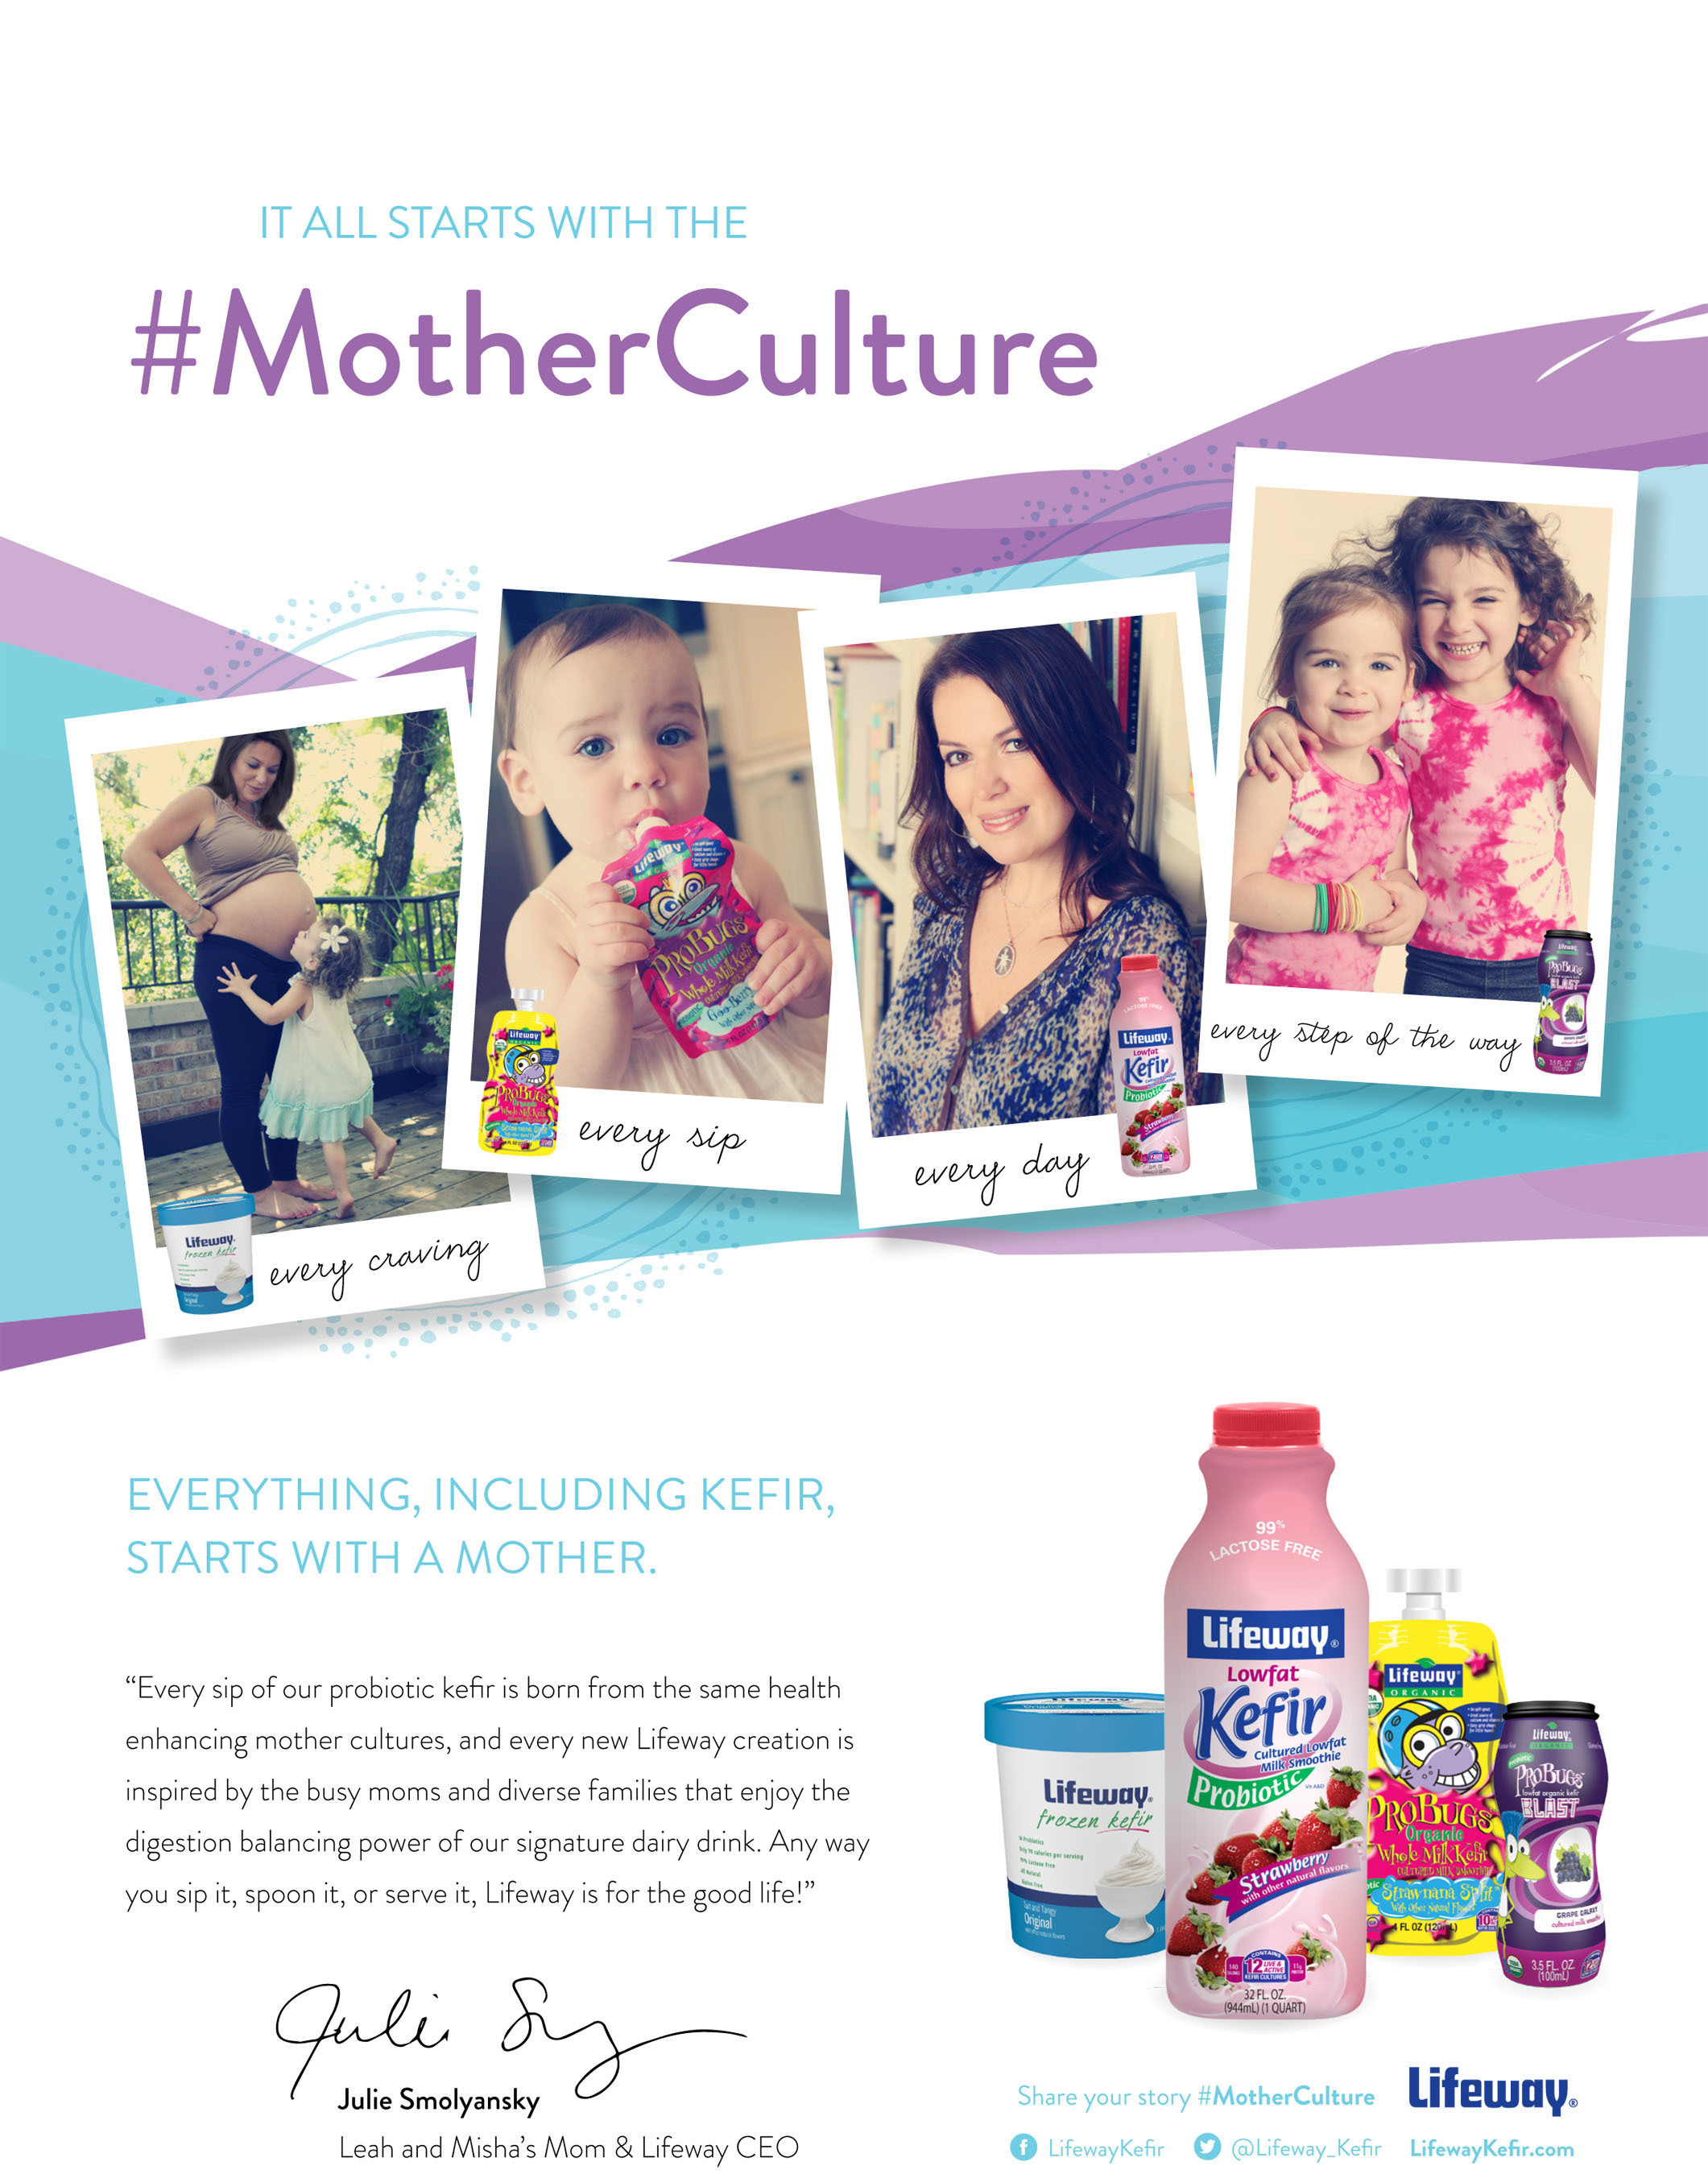 Lifeway Foods Debuts National #MotherCulture Ad Campaign for Kefir Products (PRNewsFoto/Lifeway Foods)